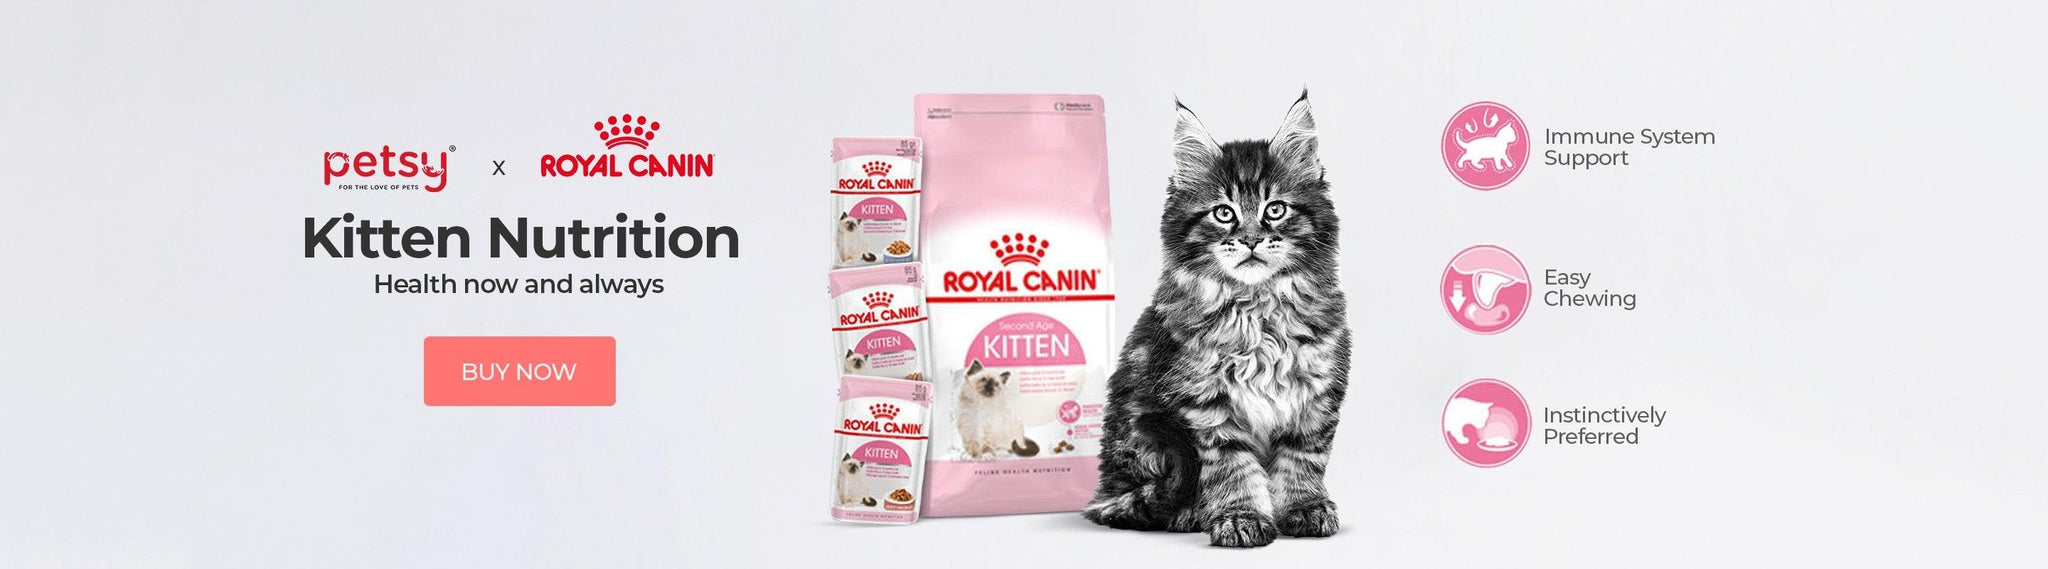 Royal Canin Kitten - Petsy